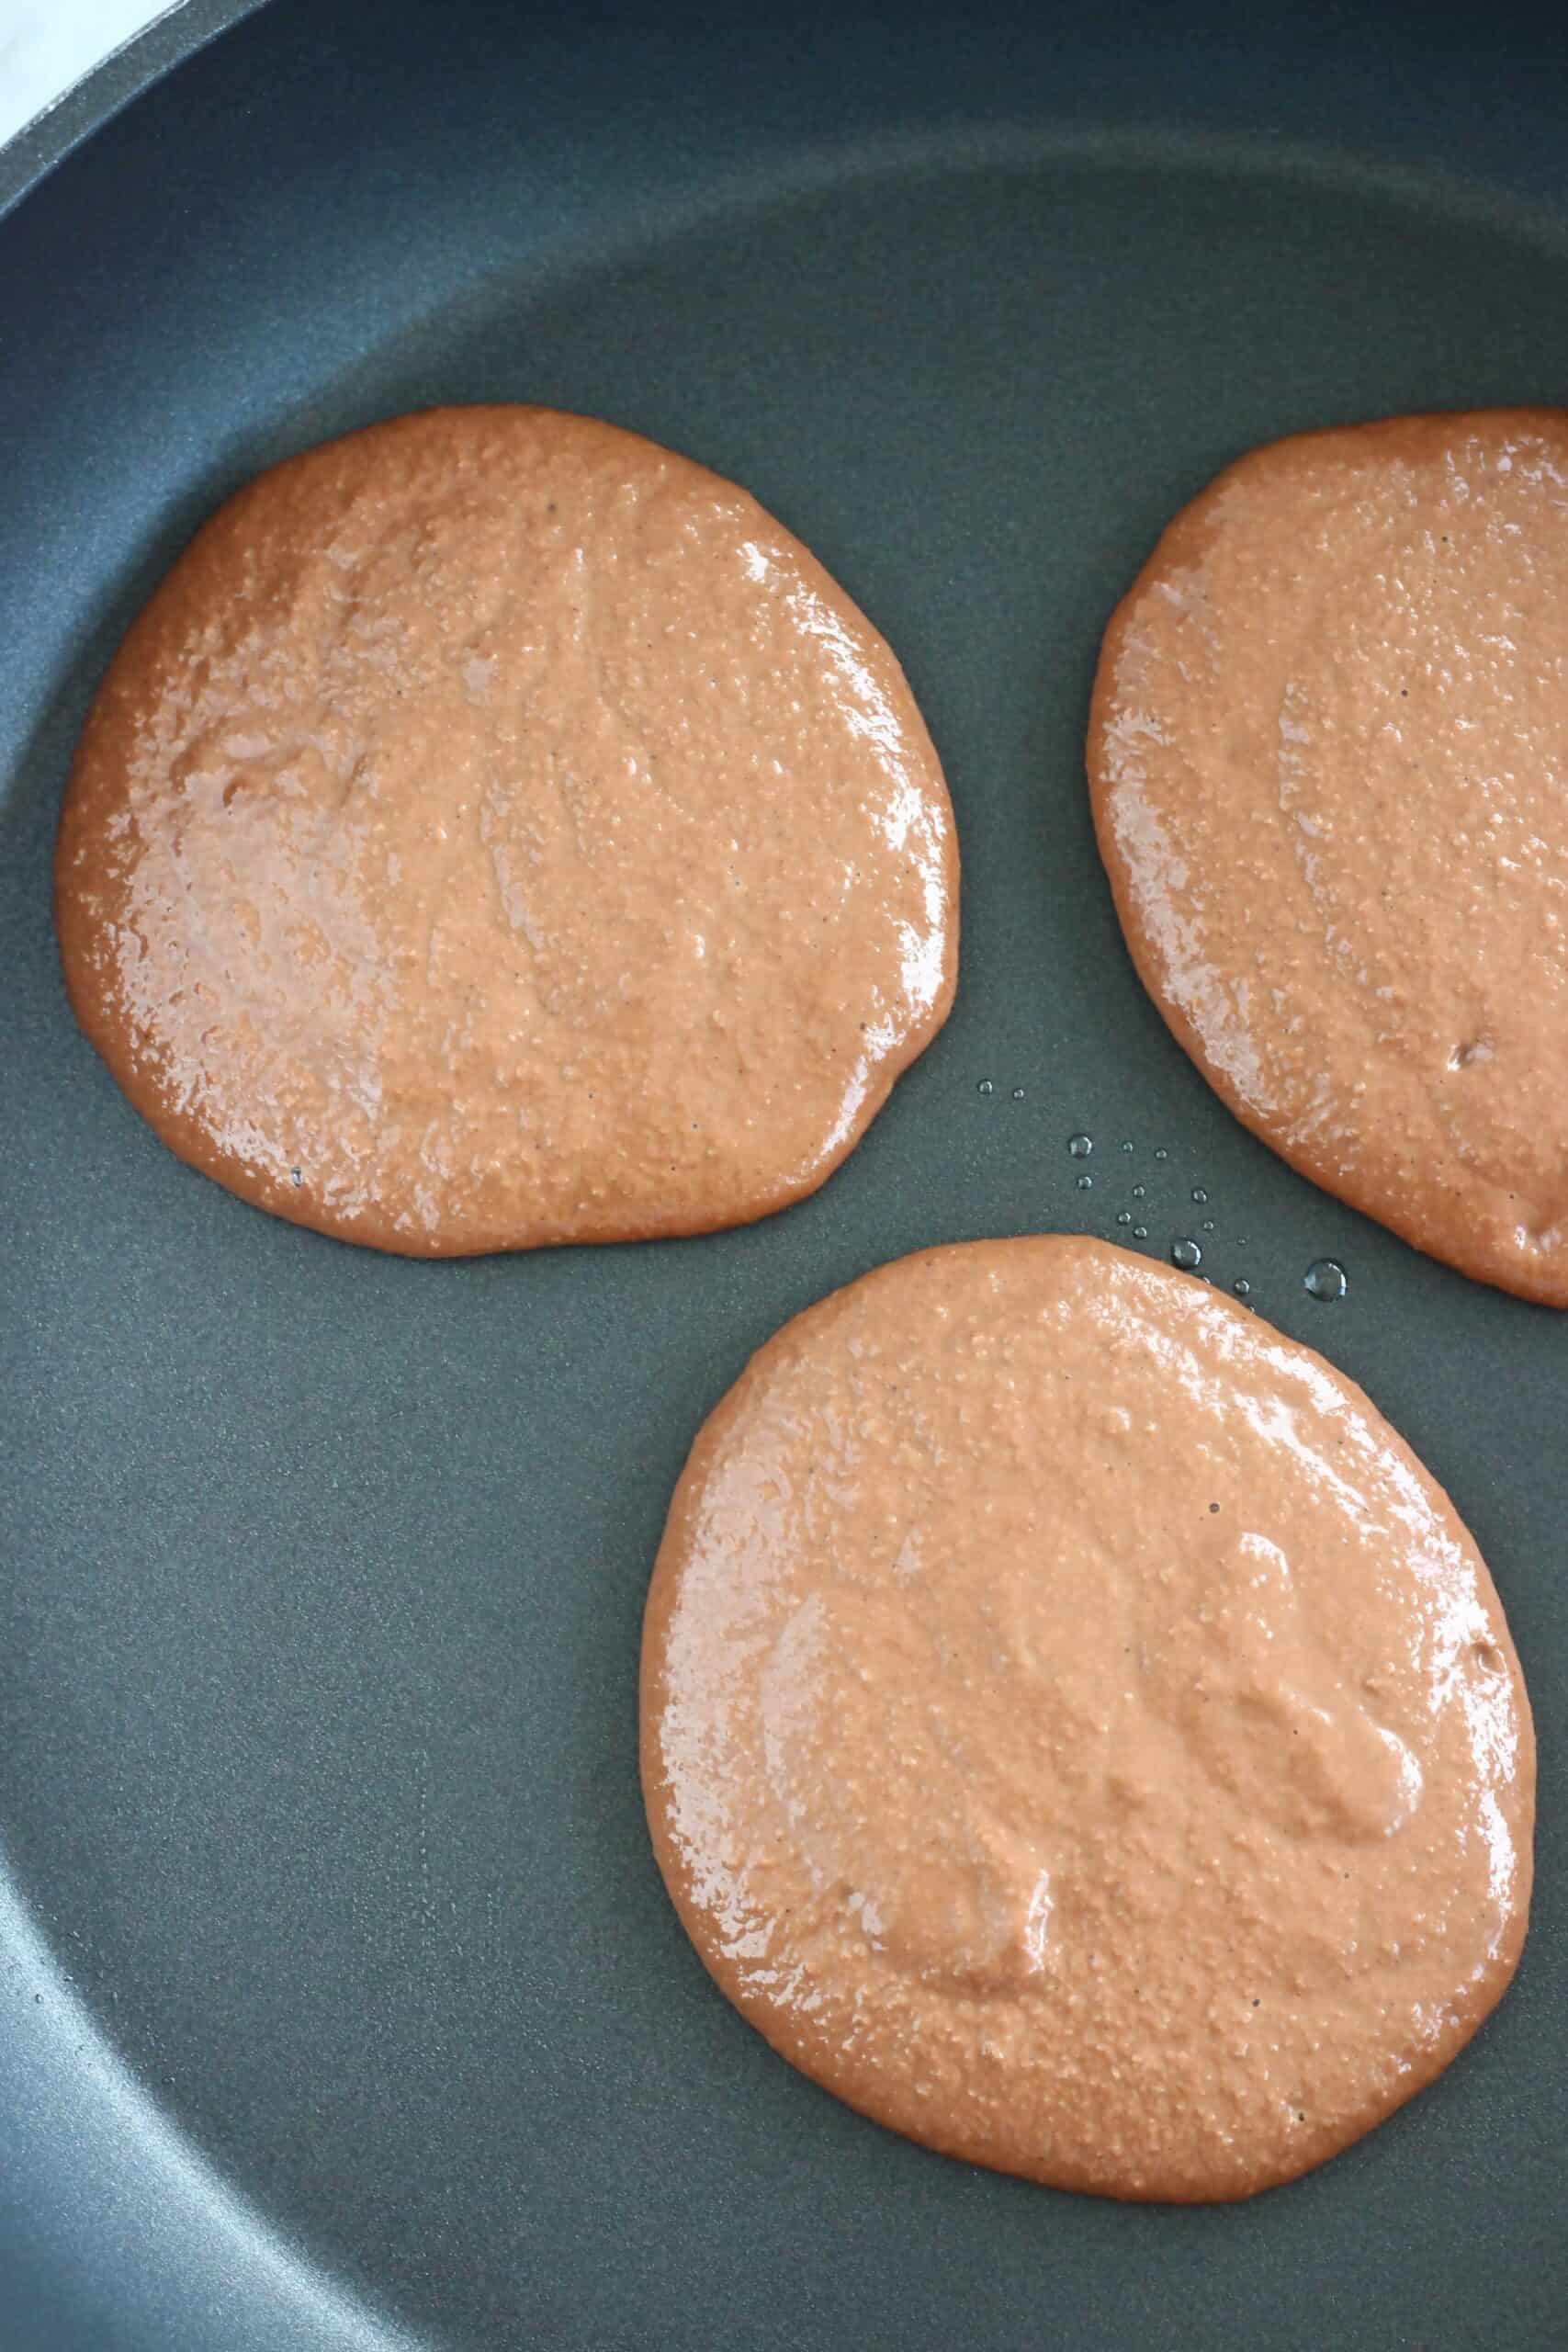 Raw gluten-free vegan chocolate pancakes being cooked in a frying pan